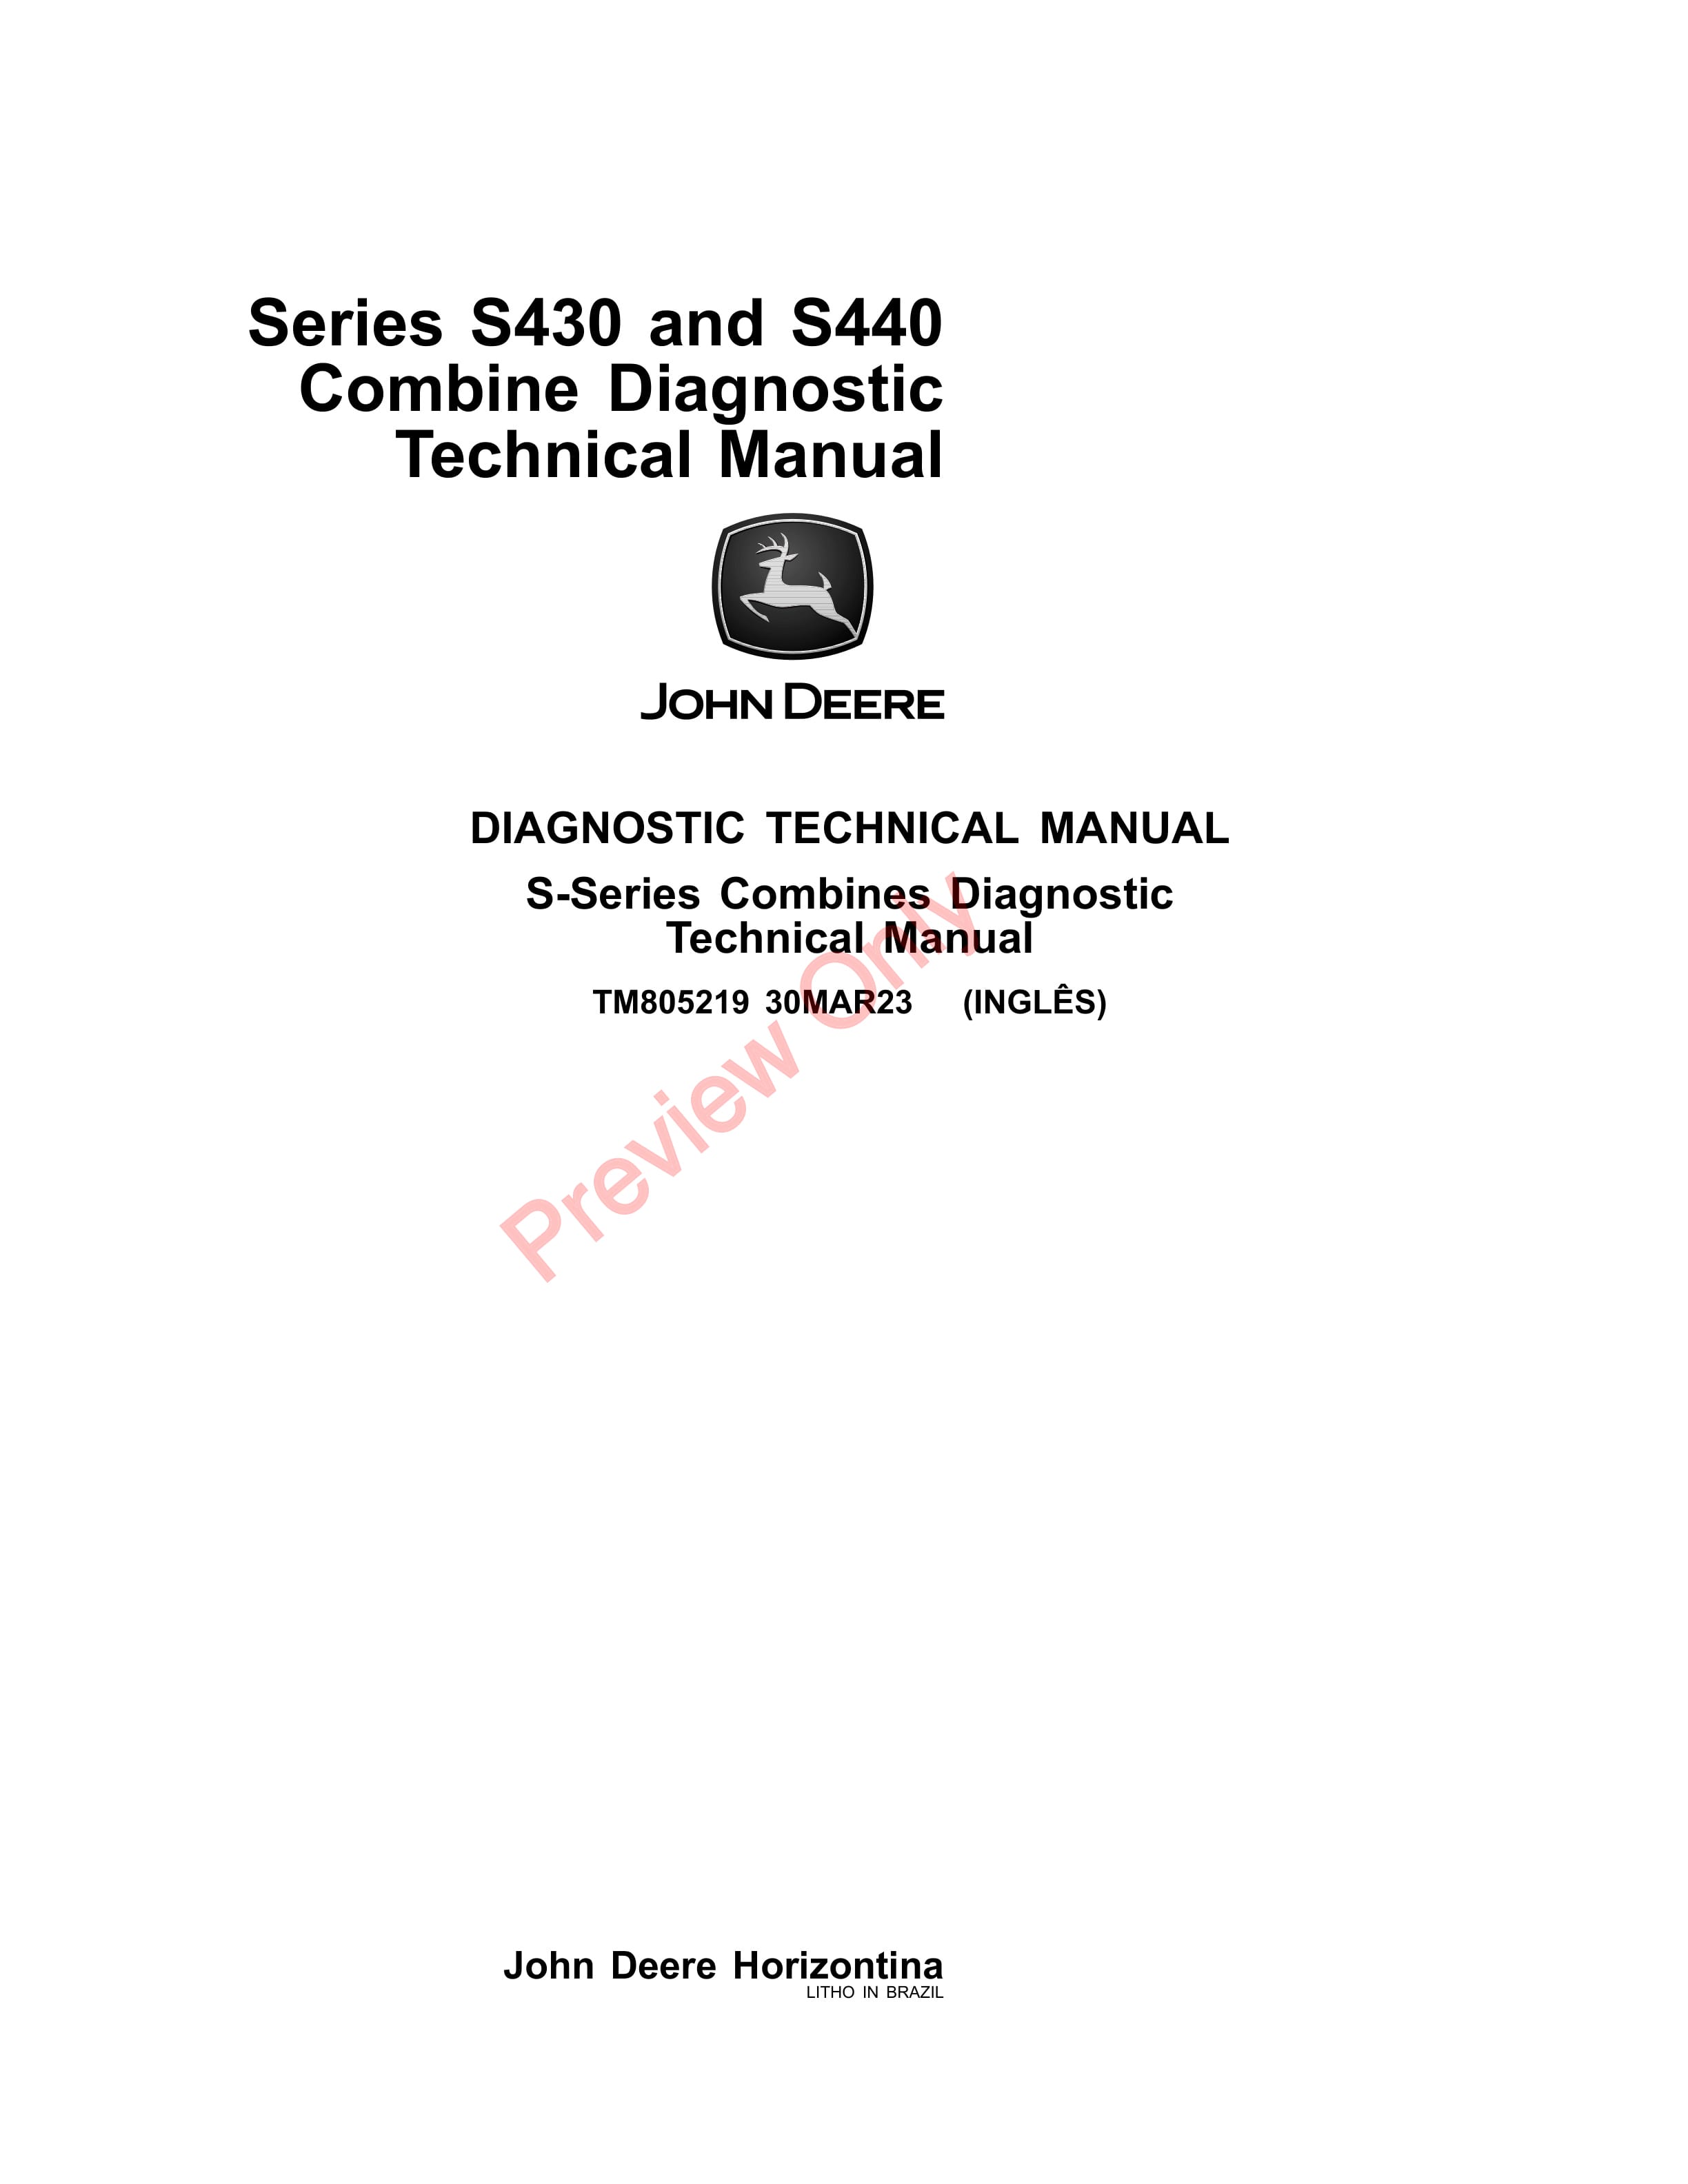 John Deere Series S430 and S440 Combine Diagnostic Technical Manual TM805219 30MAR23 1